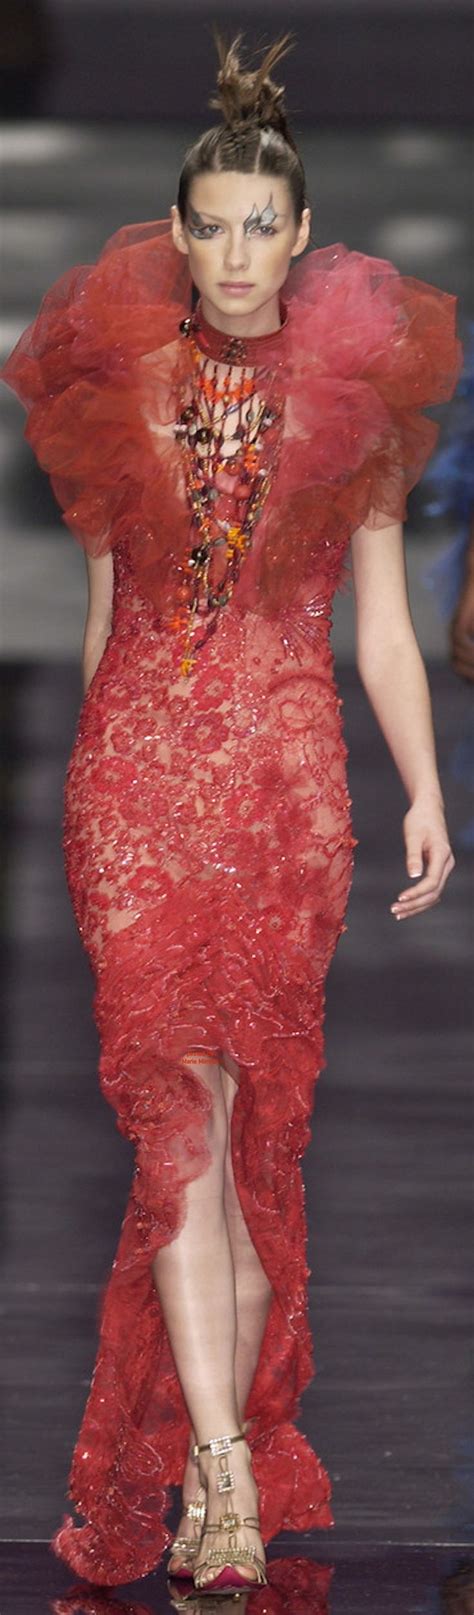 Catriona Balfe In Emmanuel Ungaro Fashion Gowns Crazy Dresses Fashion